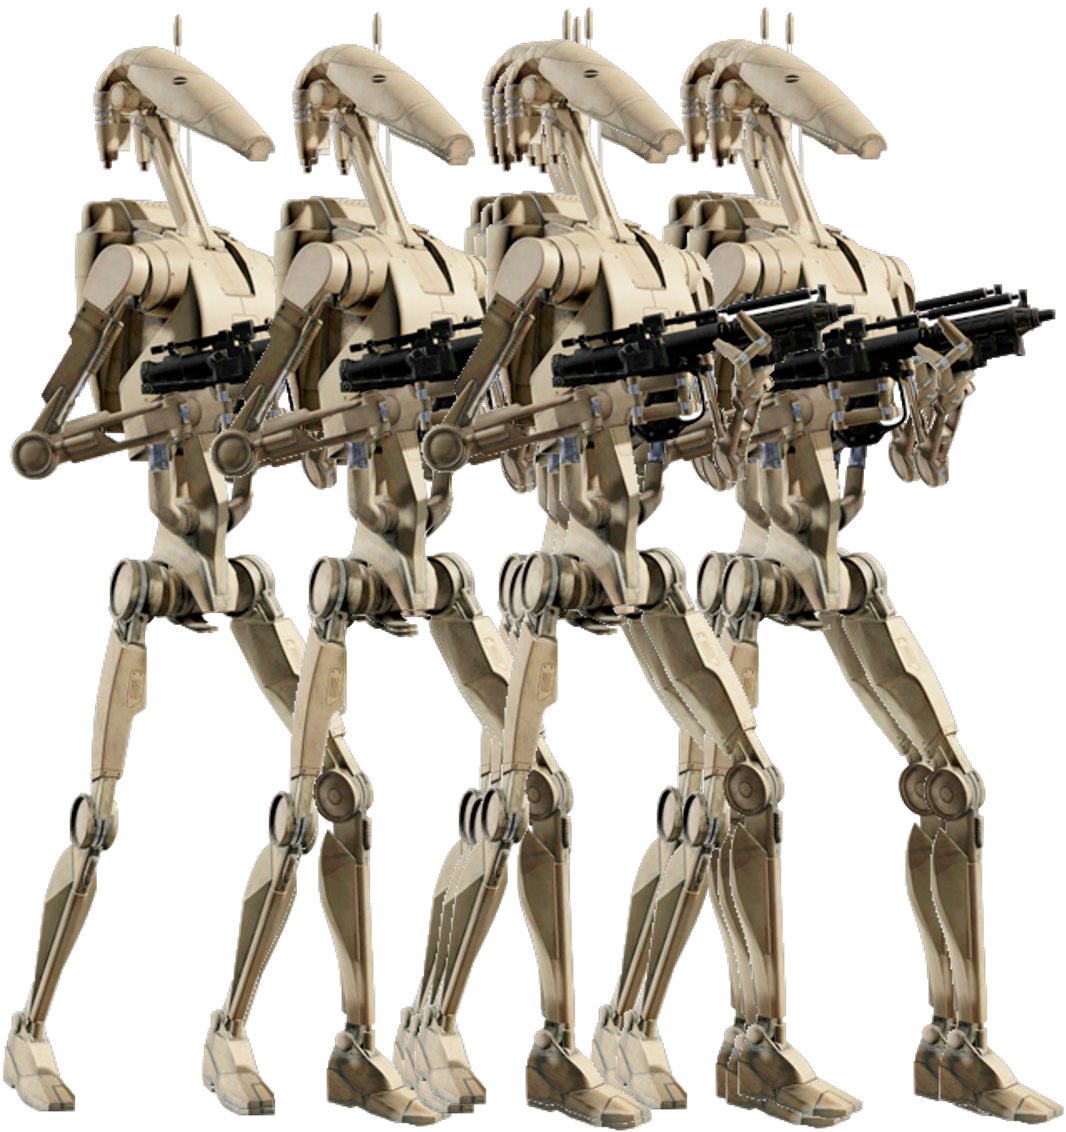 A Group Of Robots Holding Guns